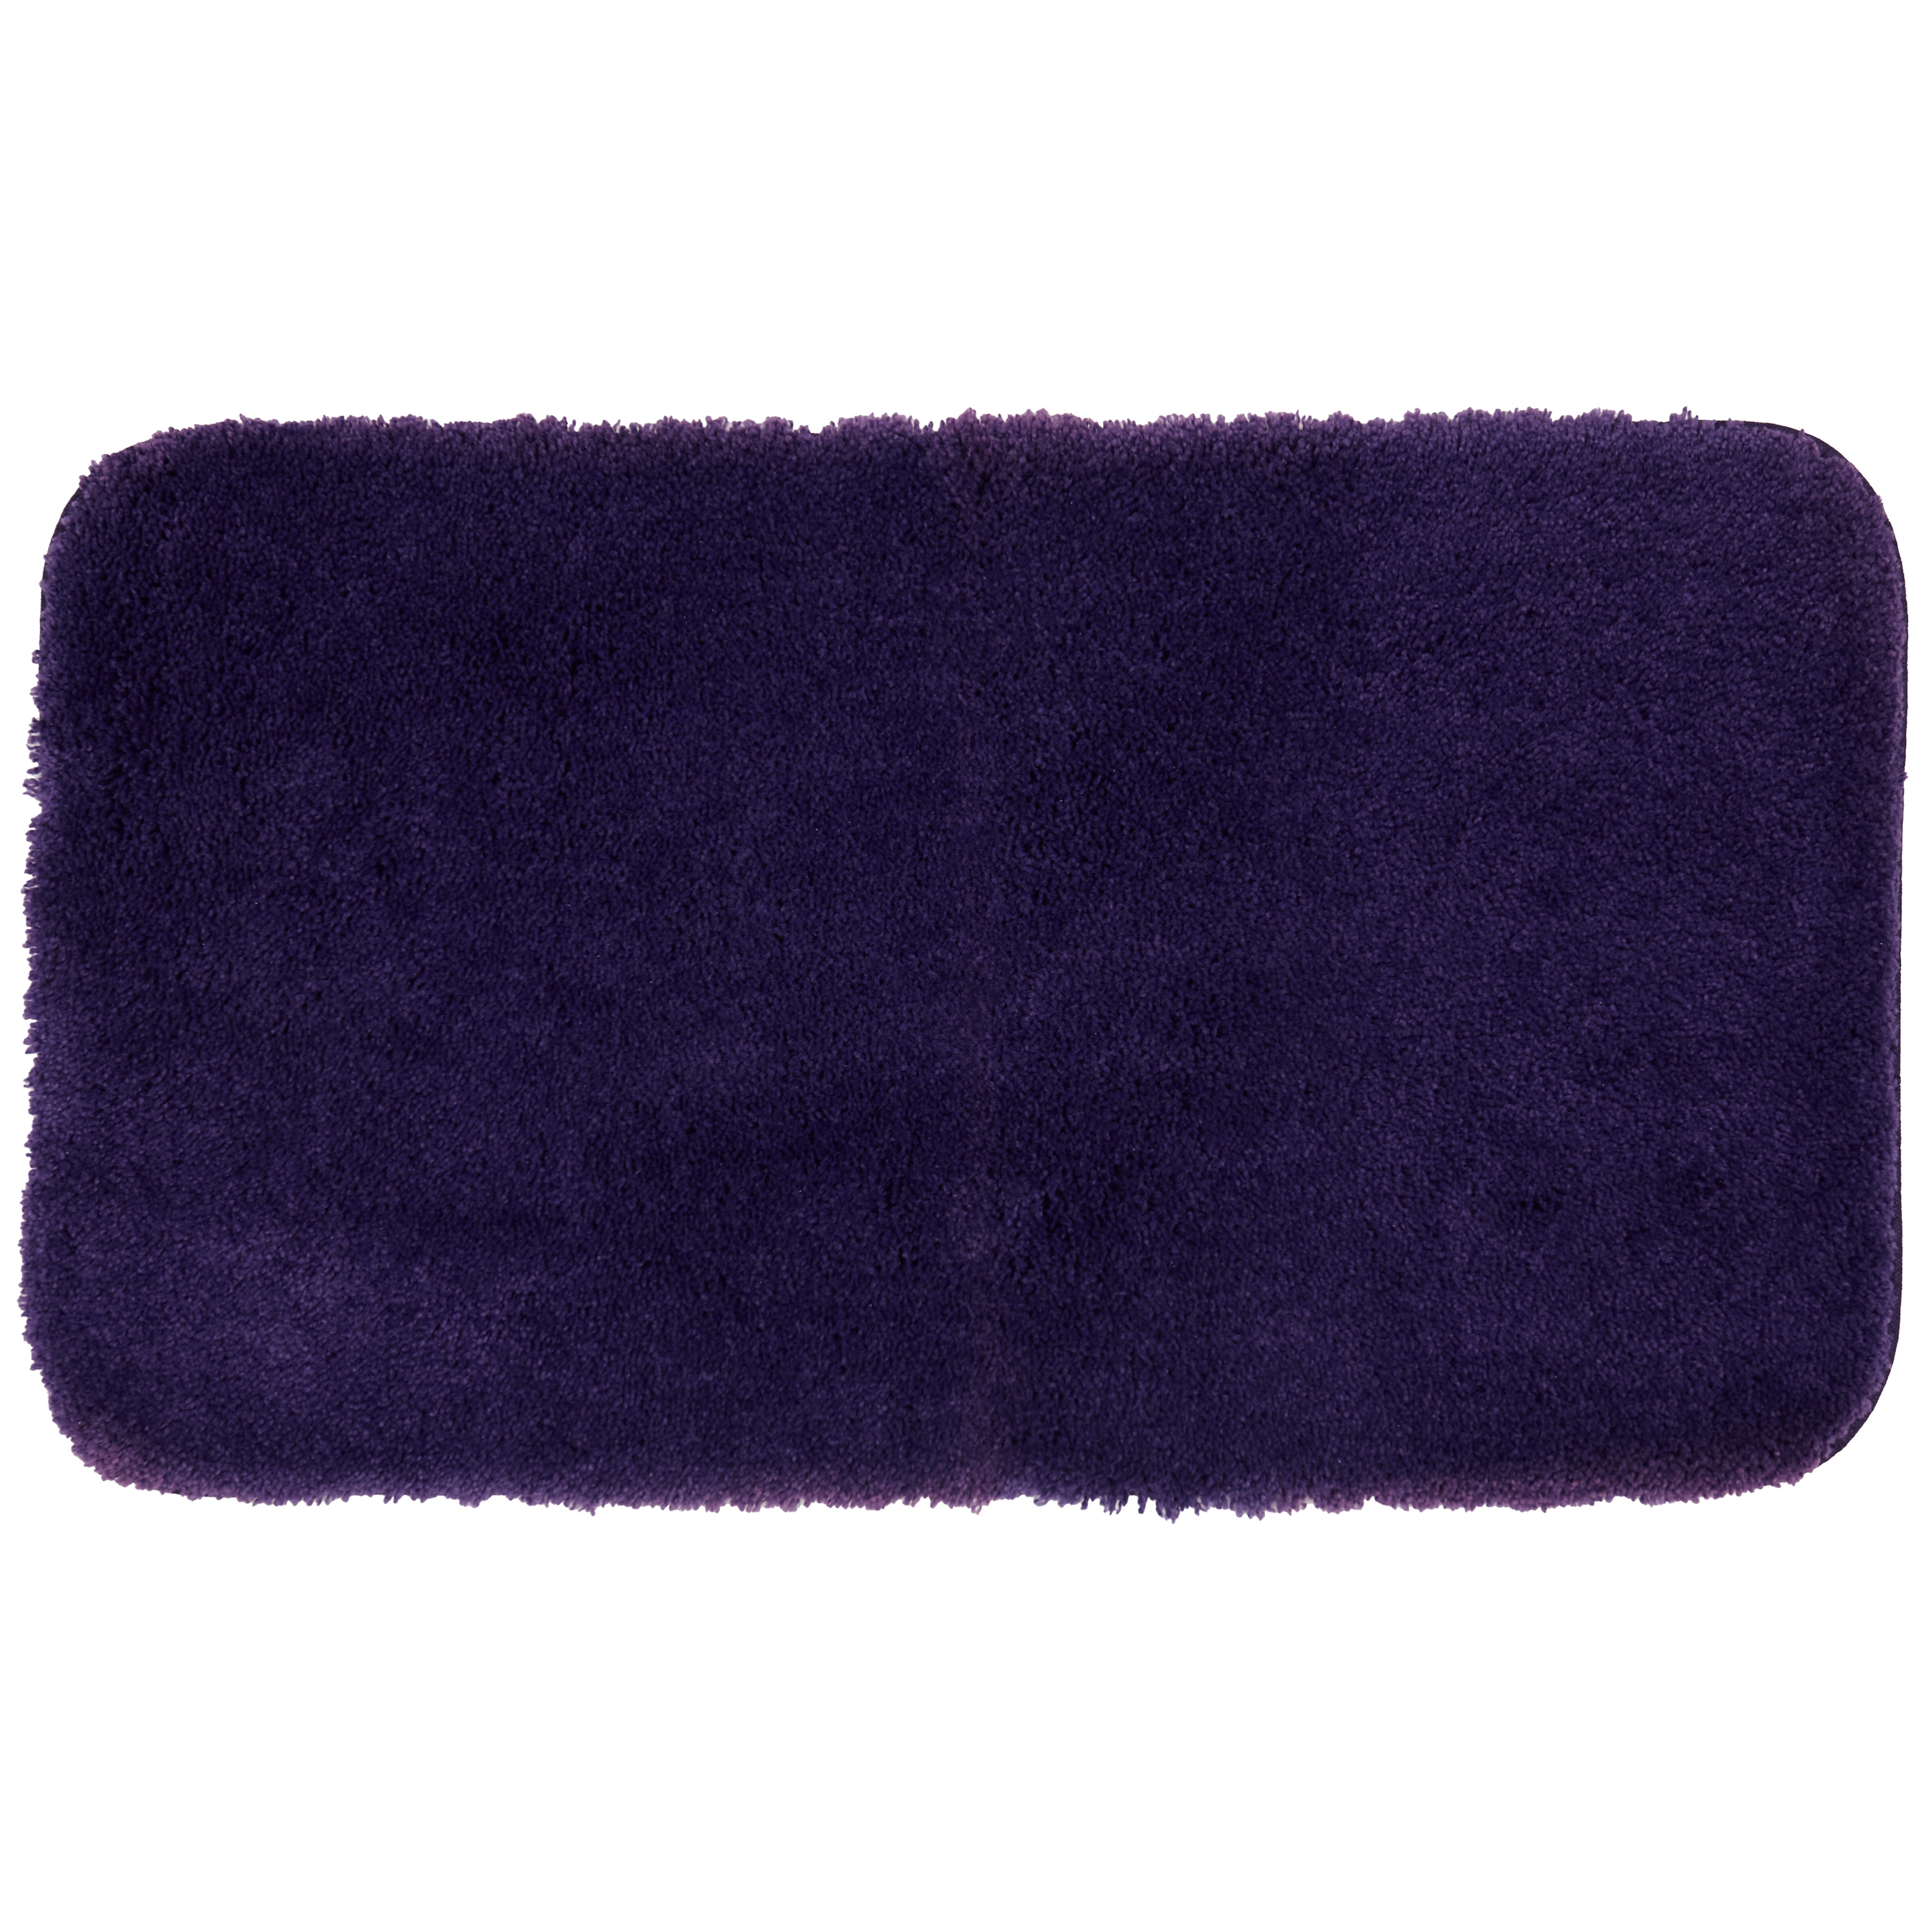 LMSM Lavender Bathroom Rugs, Purple Bath Mats for One Size, Purple